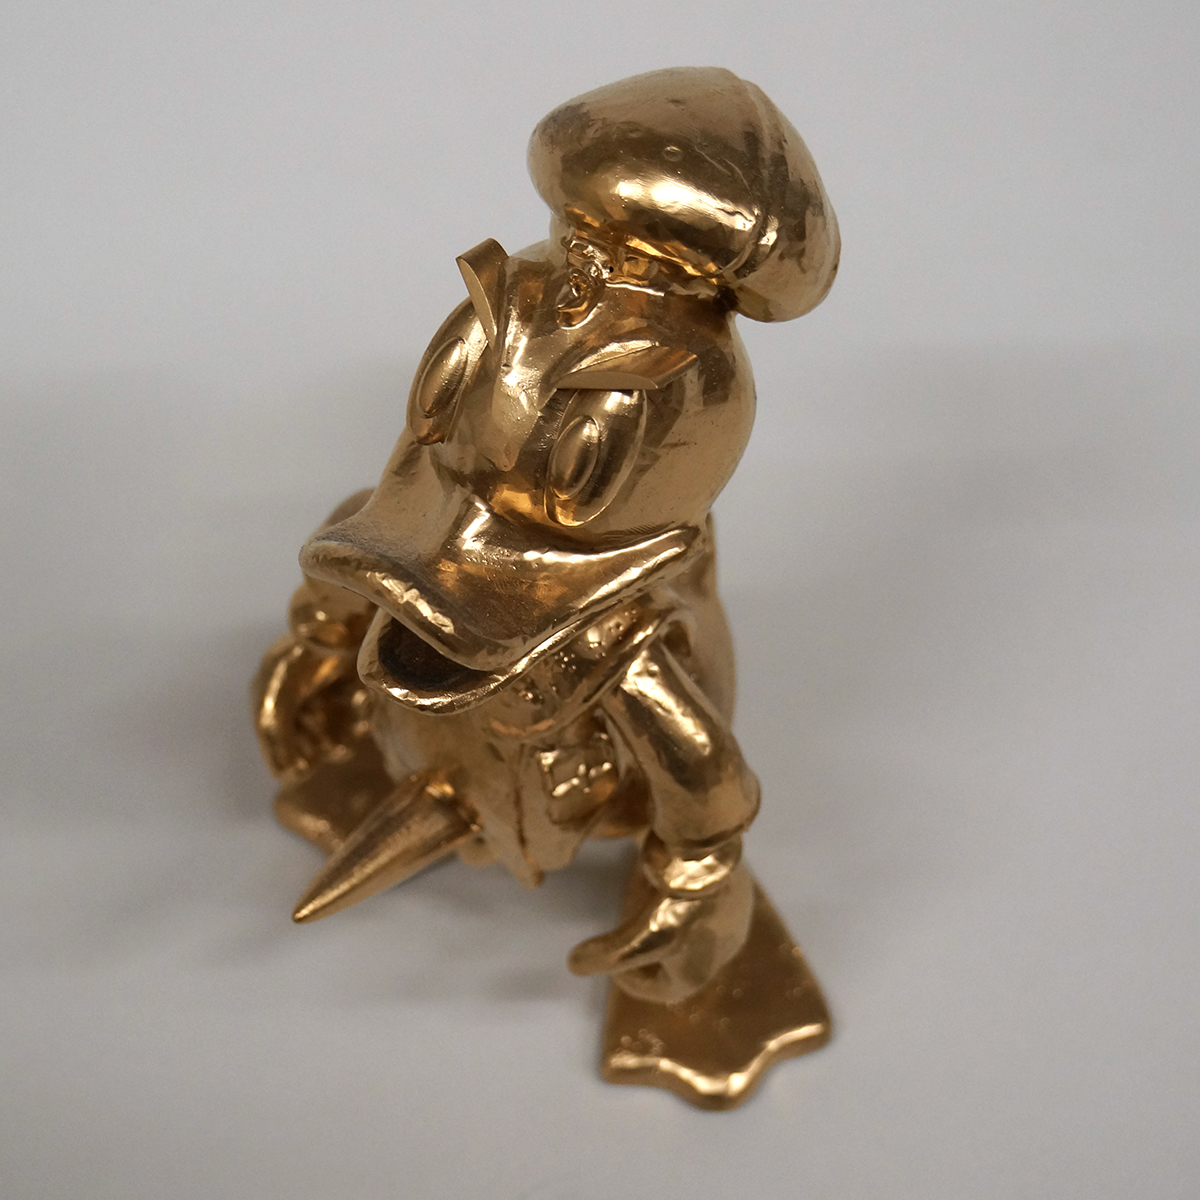 Felikz the Fazke: Donald Dick - Gold - SALZIGBerlin - art